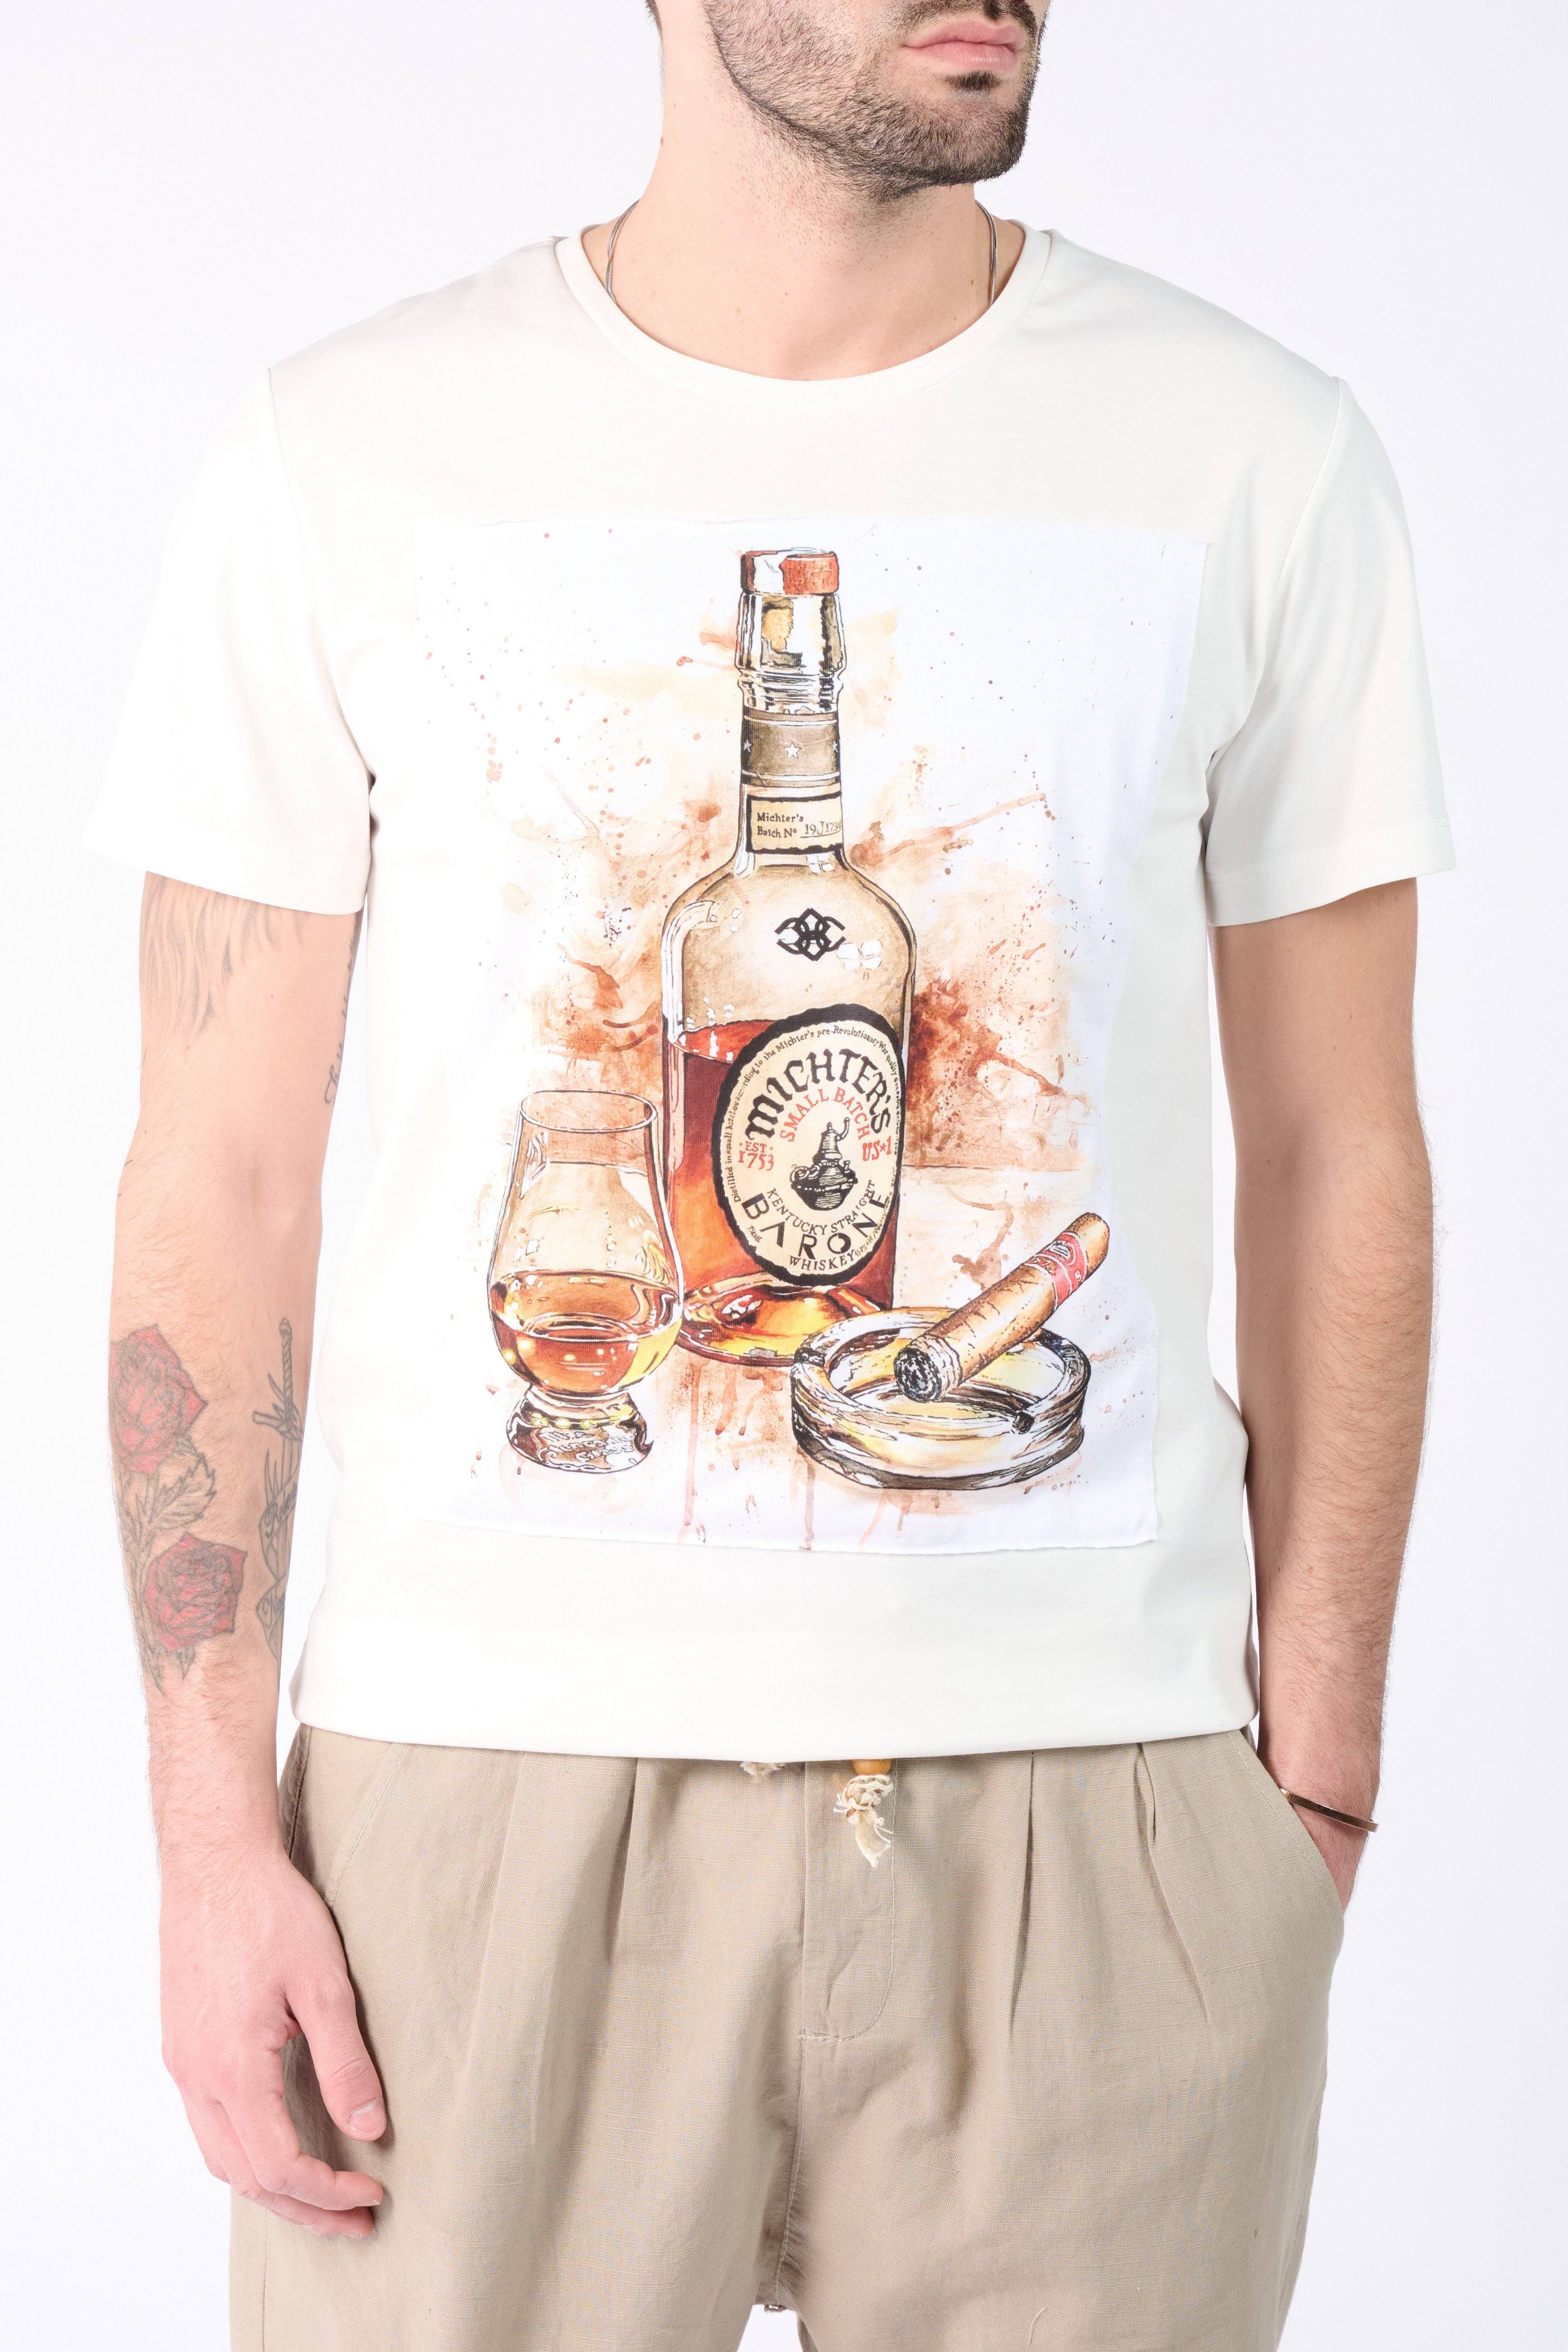 T-Shirt Uomo Stampa Whisky - Barone Firenze